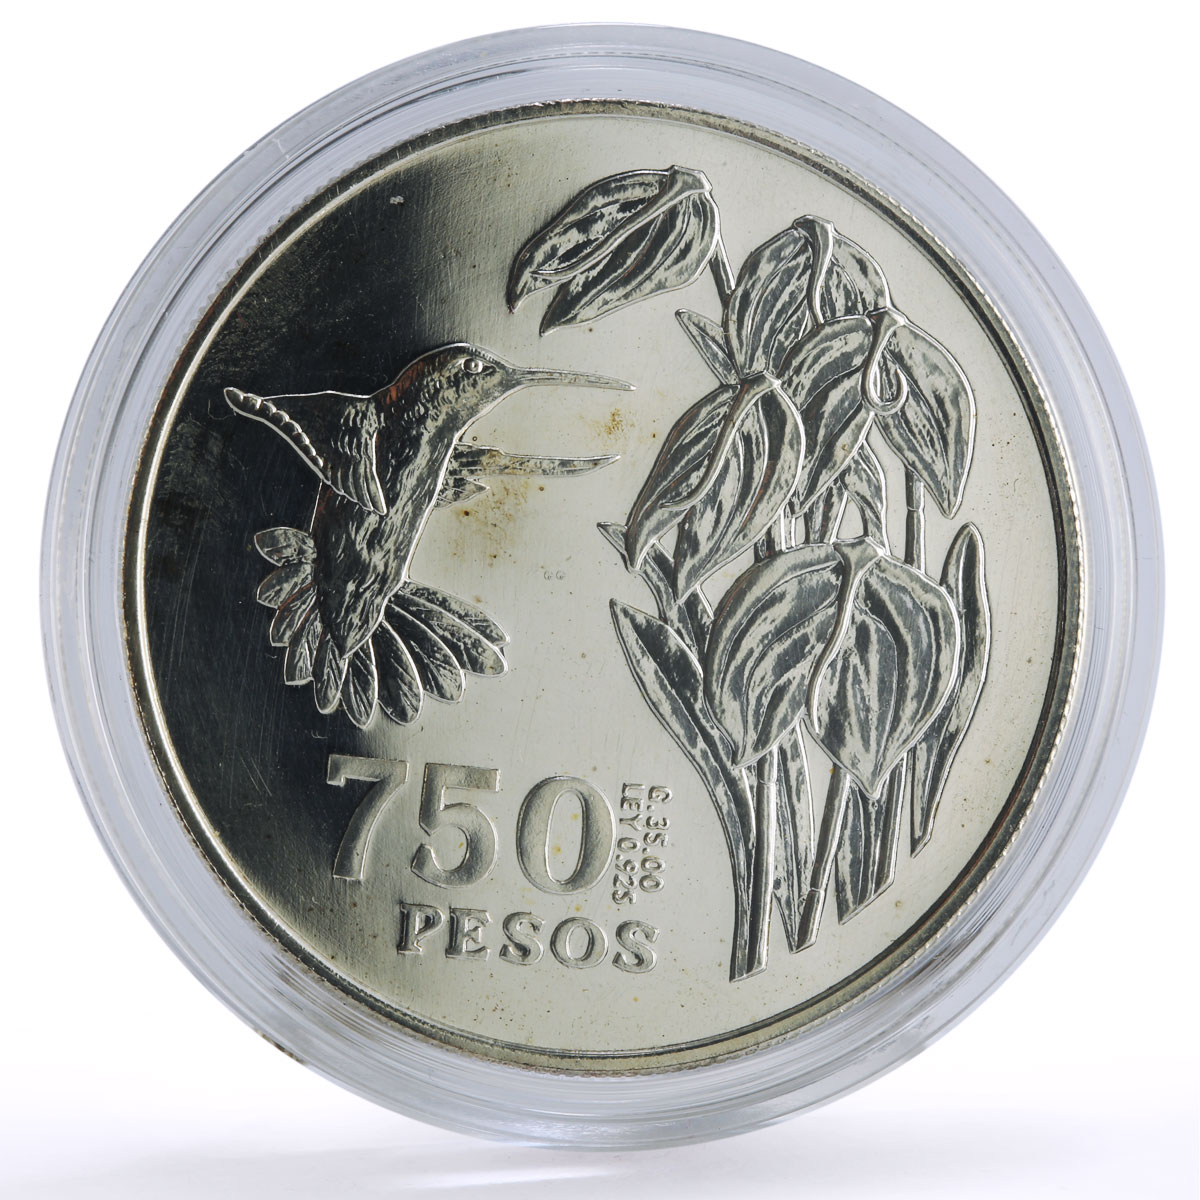 Colombia 750 pesos Conservation Wildlife Hummingbird Fauna silver coin 1978